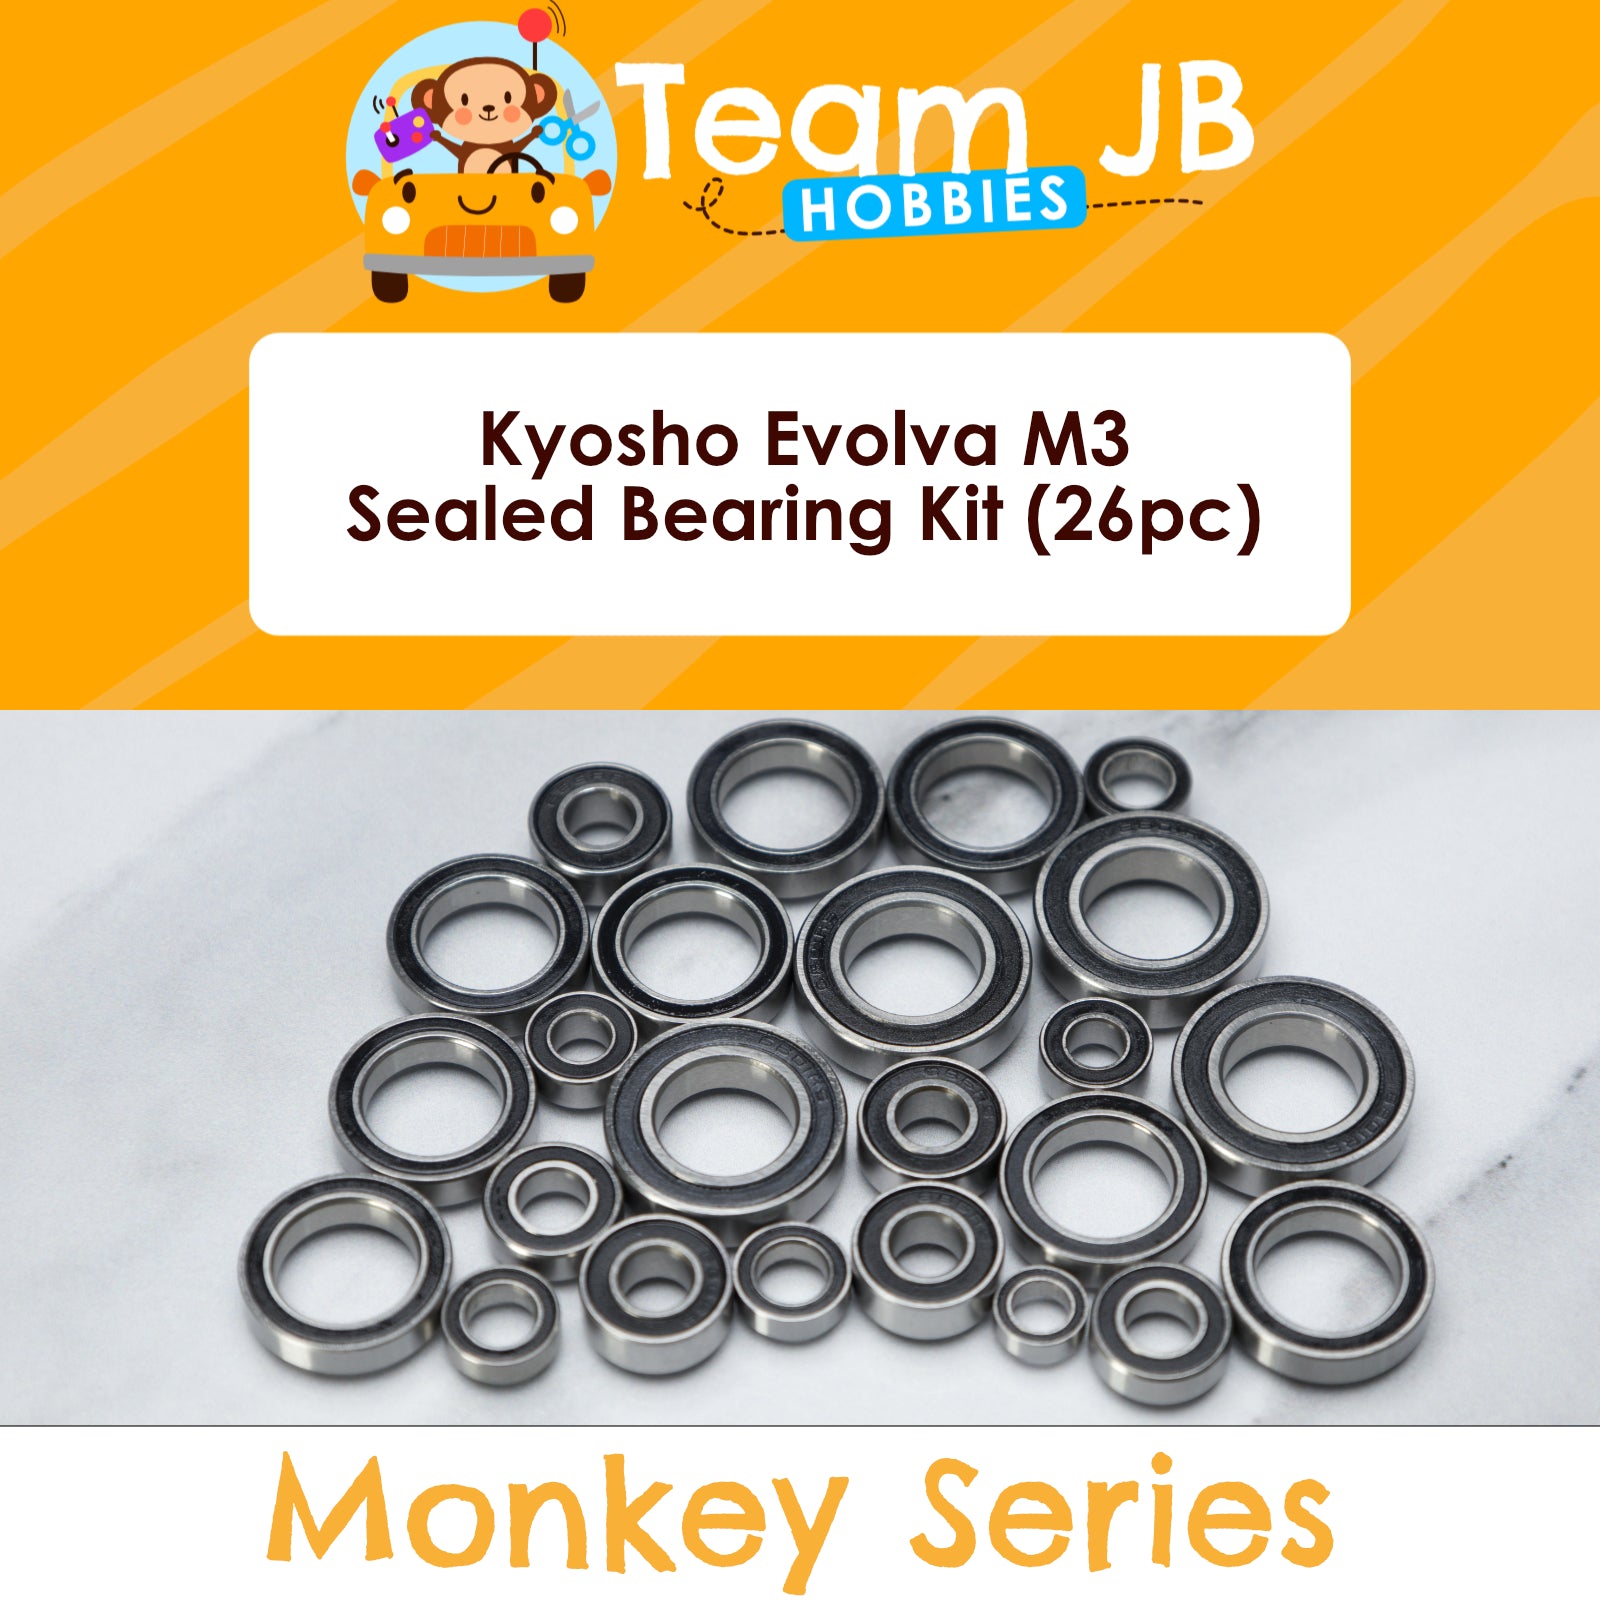 Kyosho Evolva M3 - Sealed Bearing Kit